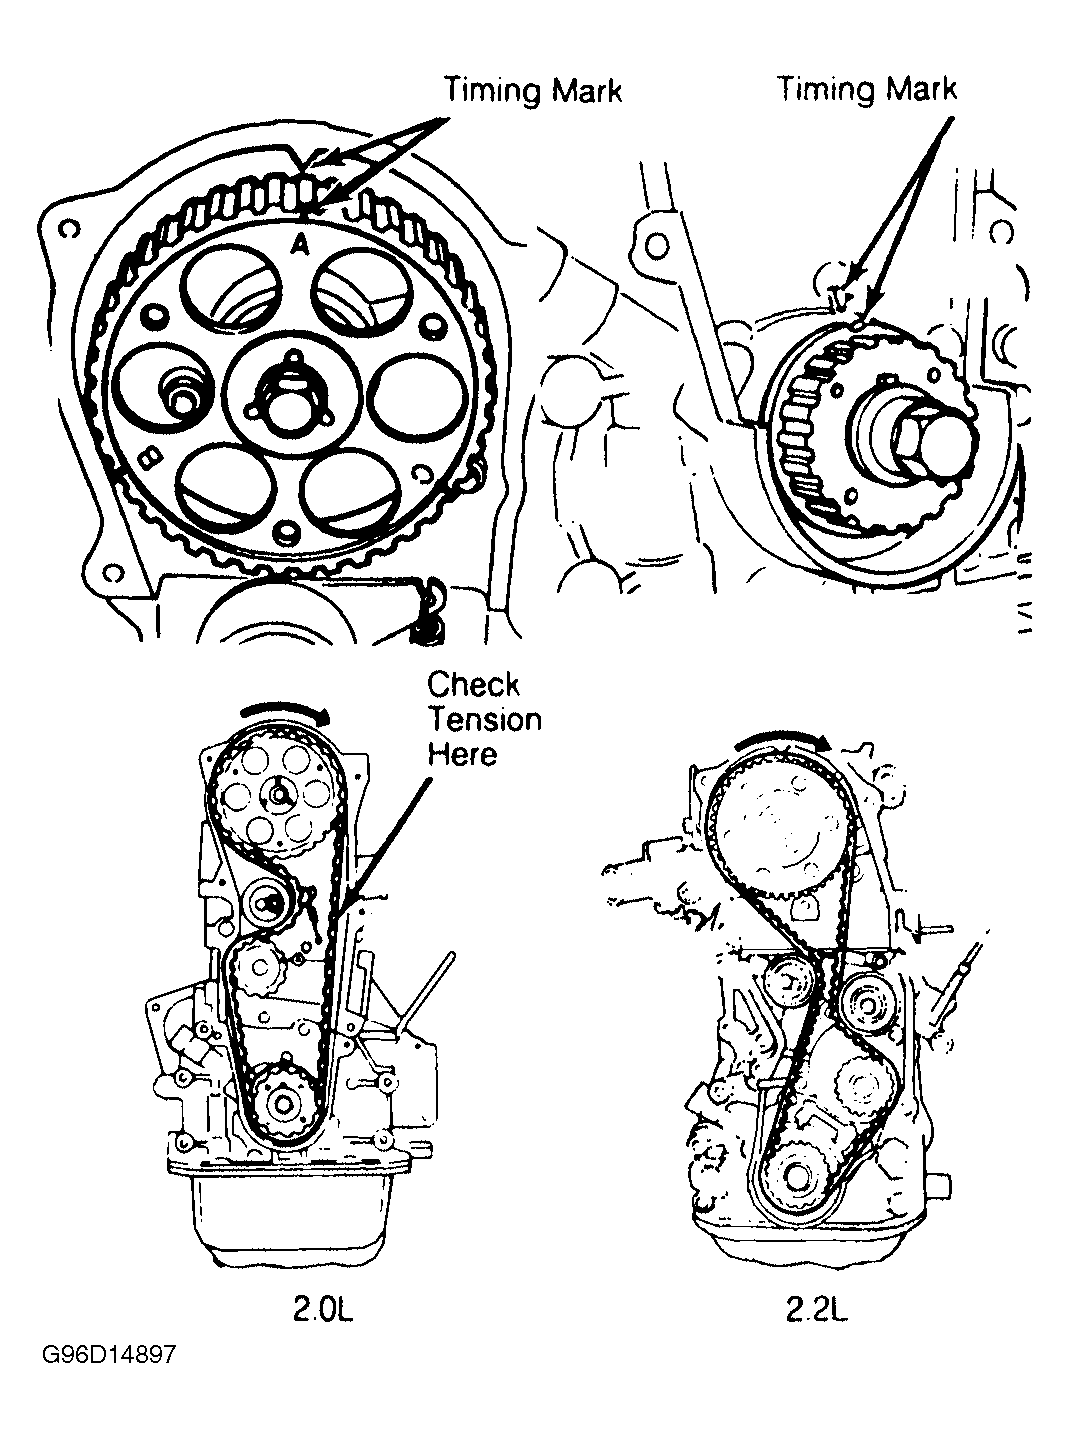 1986 Mazda B2000 Serpentine Belt Routing and Timing Belt Diagrams